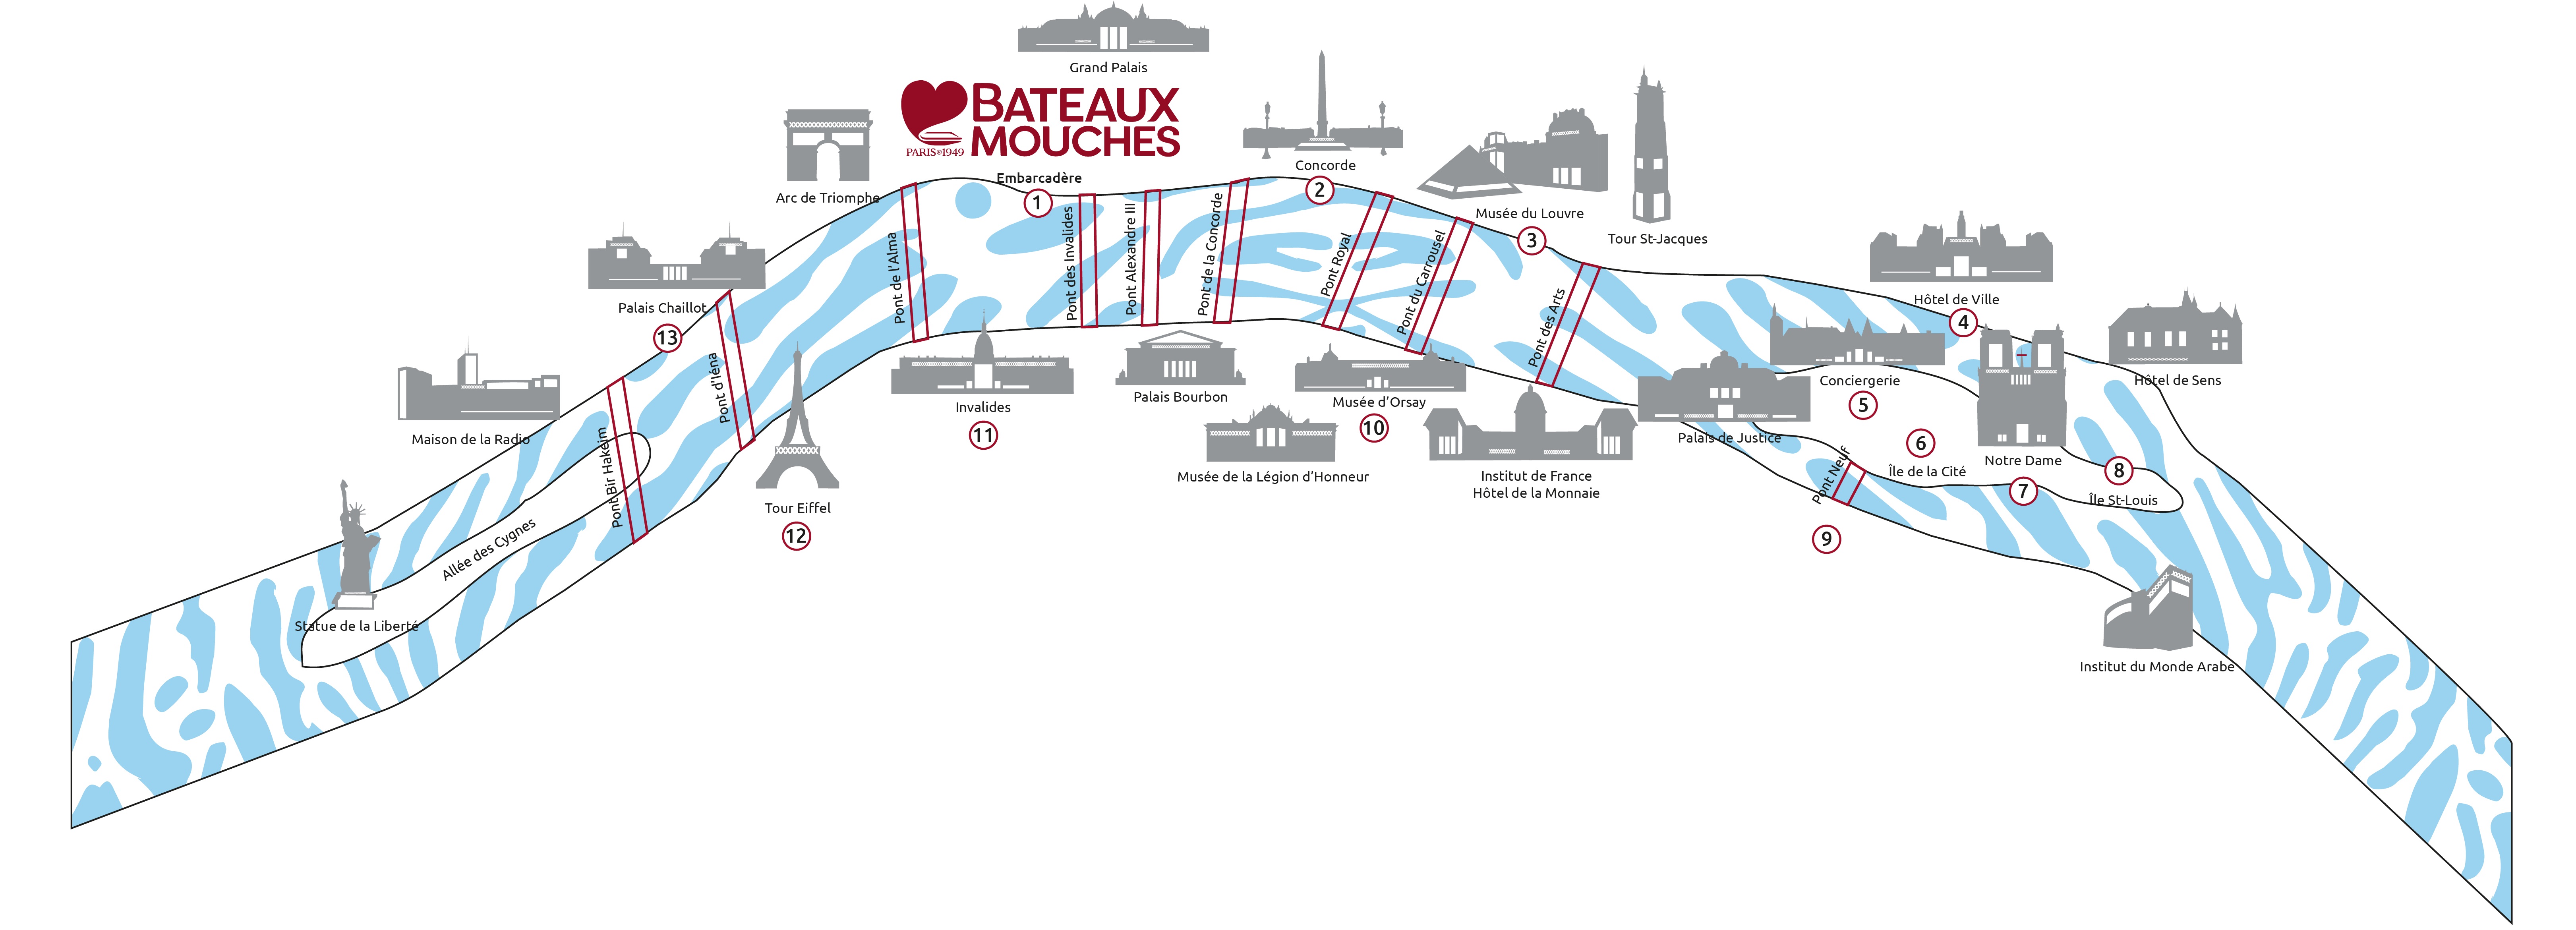 Routes of Bateaux Mouches® cruises